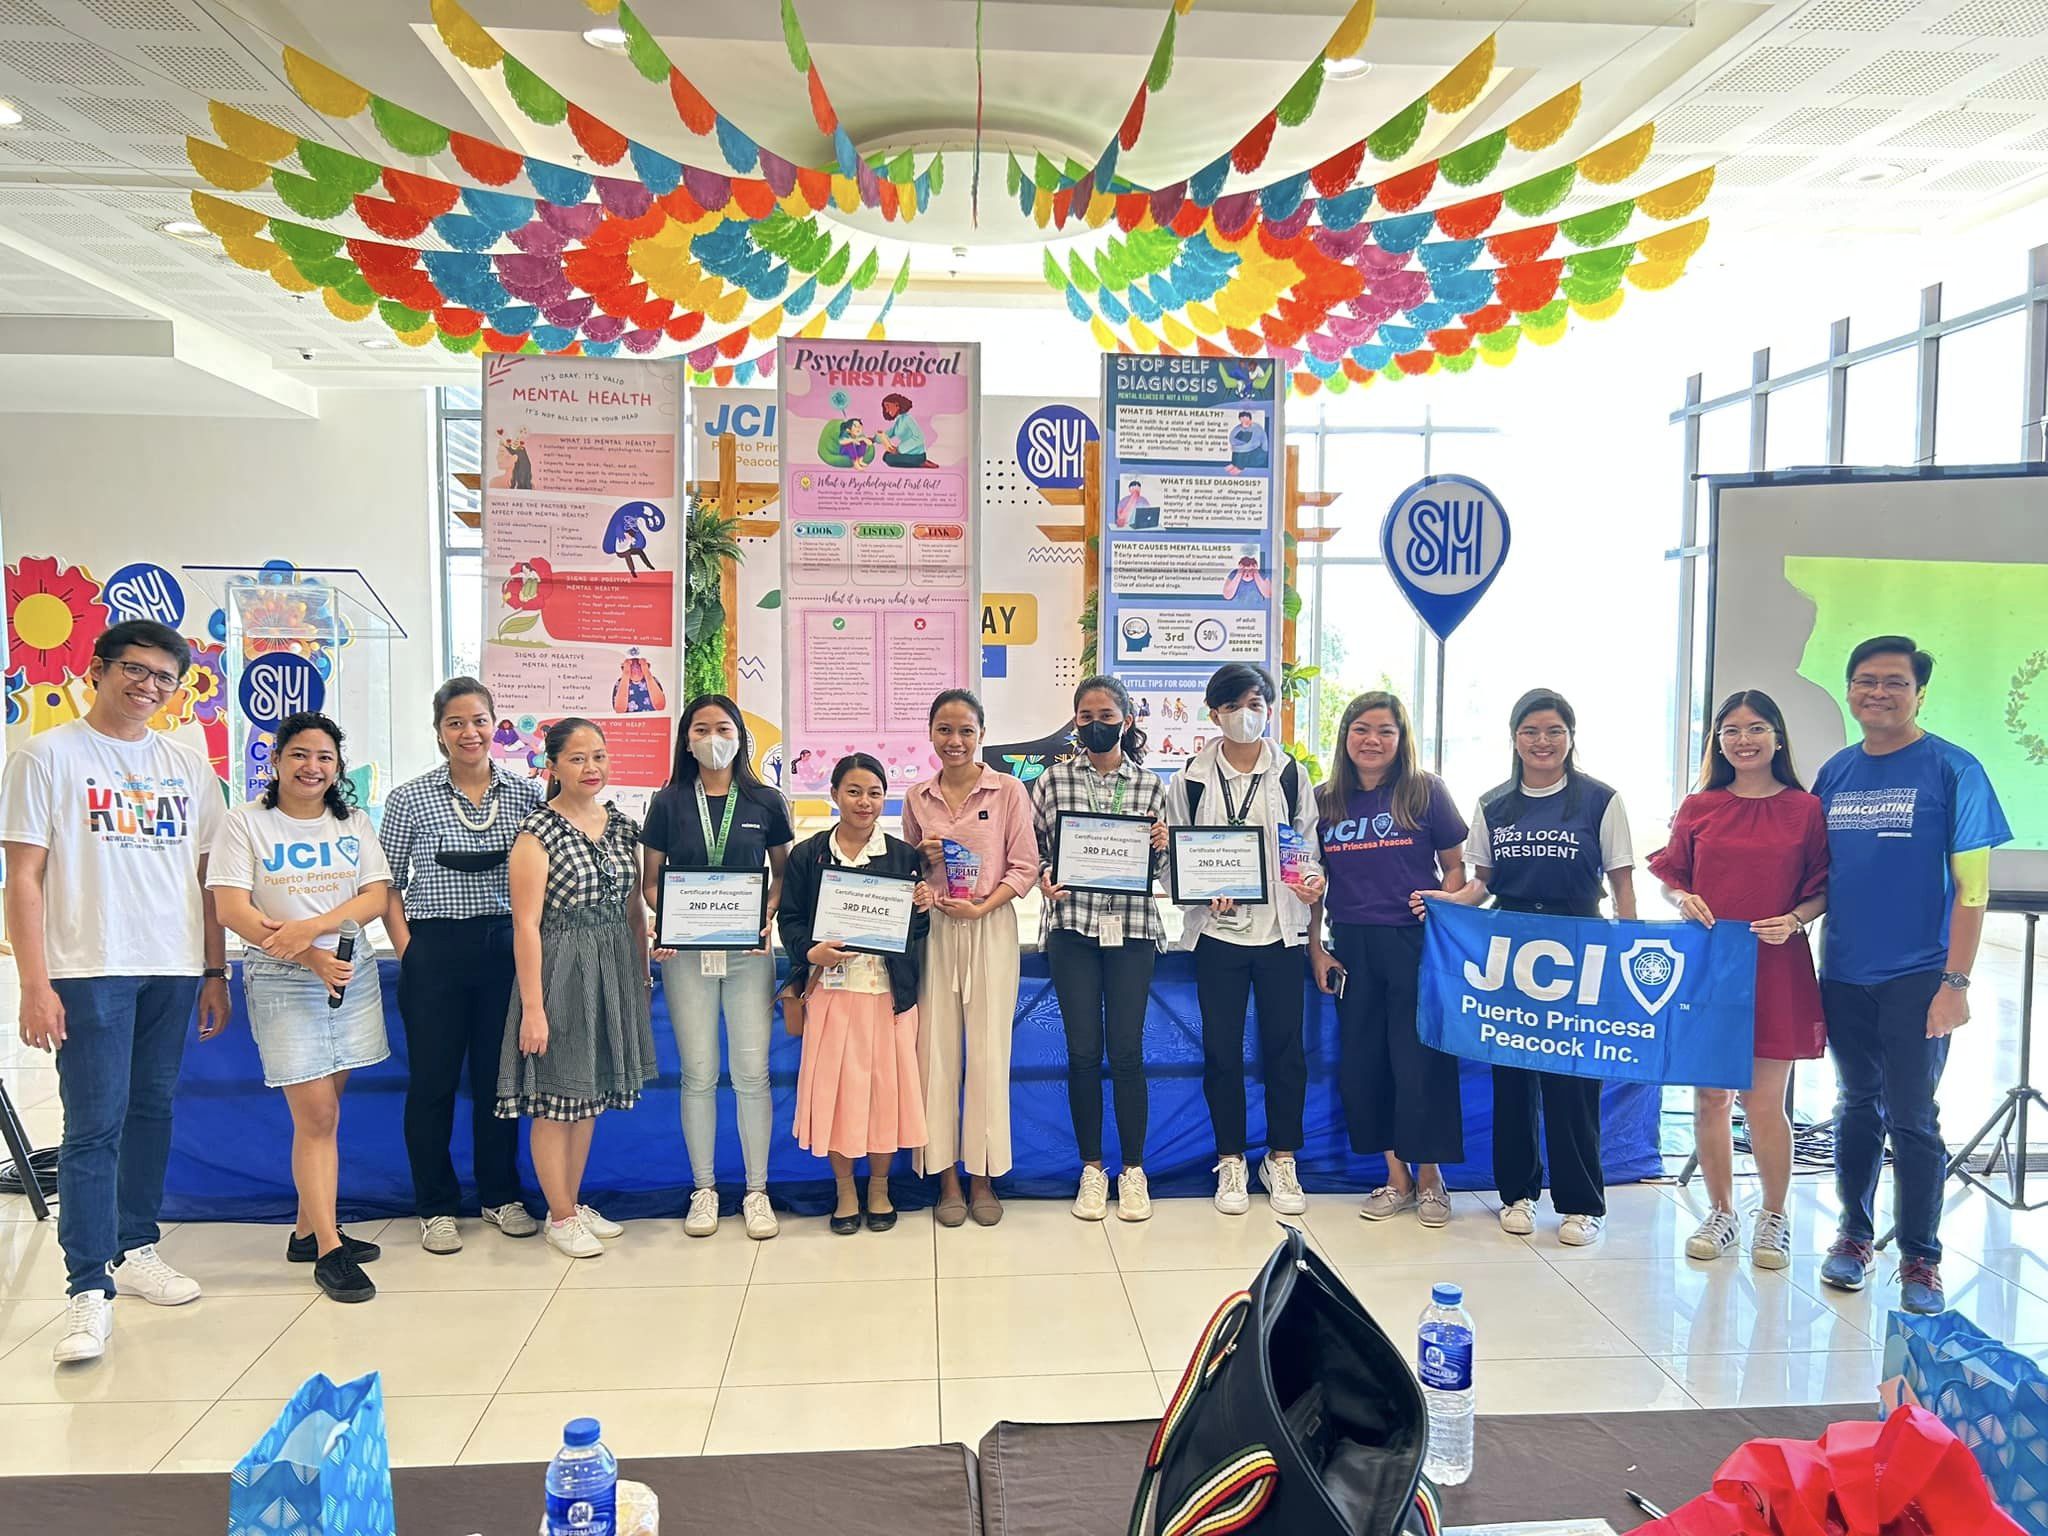 Junior Chamber International (JCI) Puerto Princesa Peacock